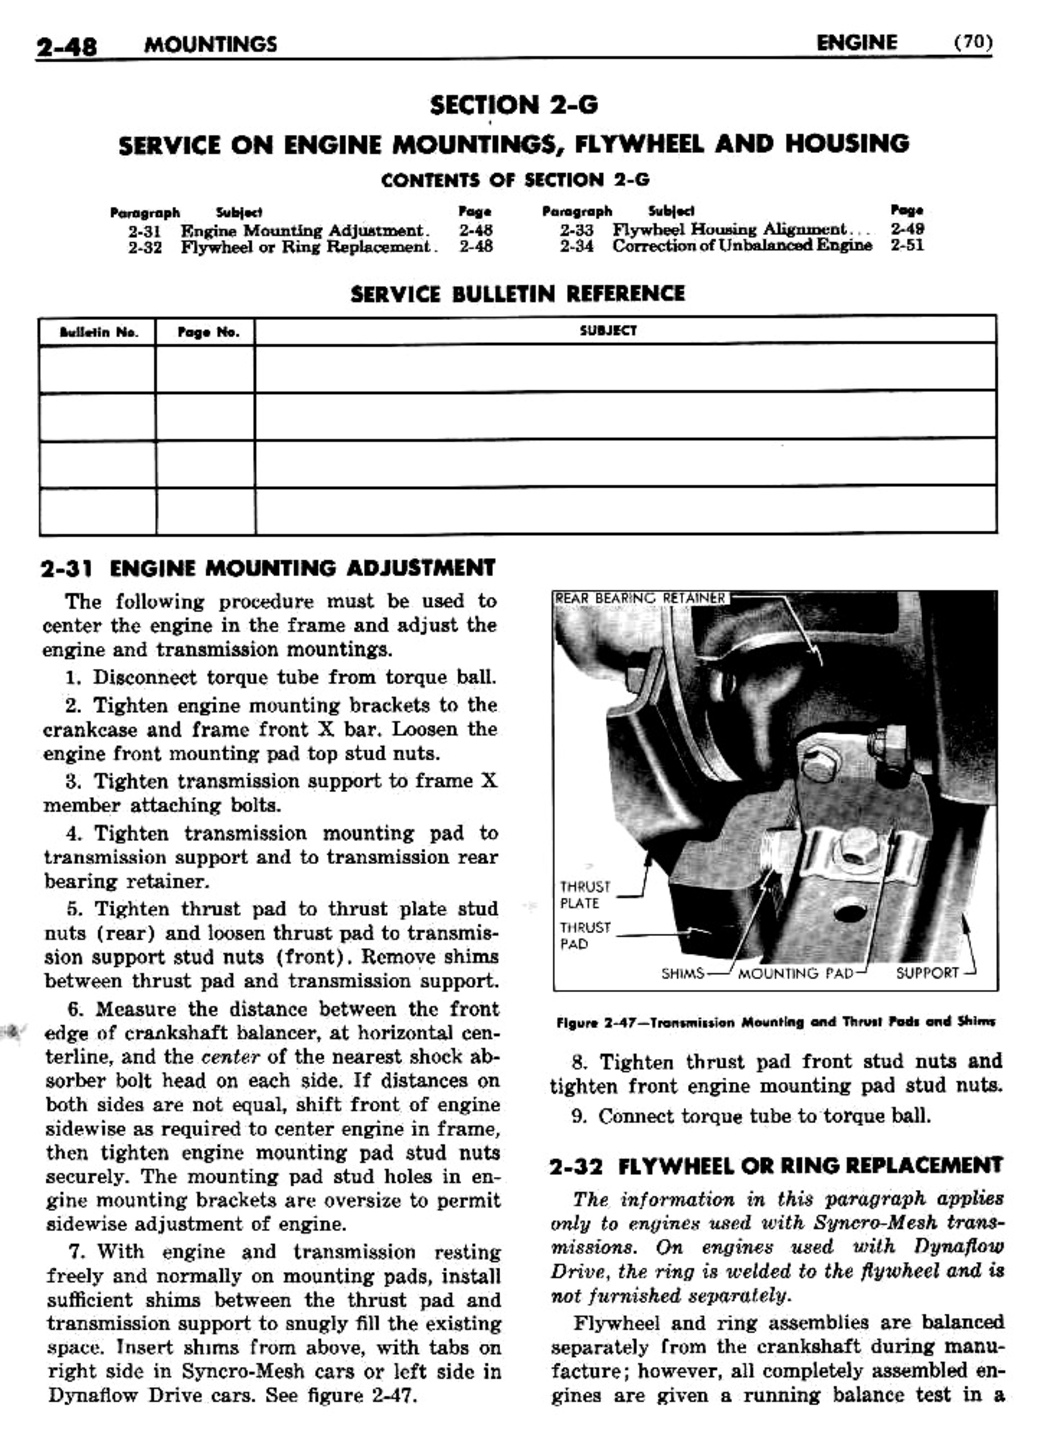 n_03 1948 Buick Shop Manual - Engine-048-048.jpg